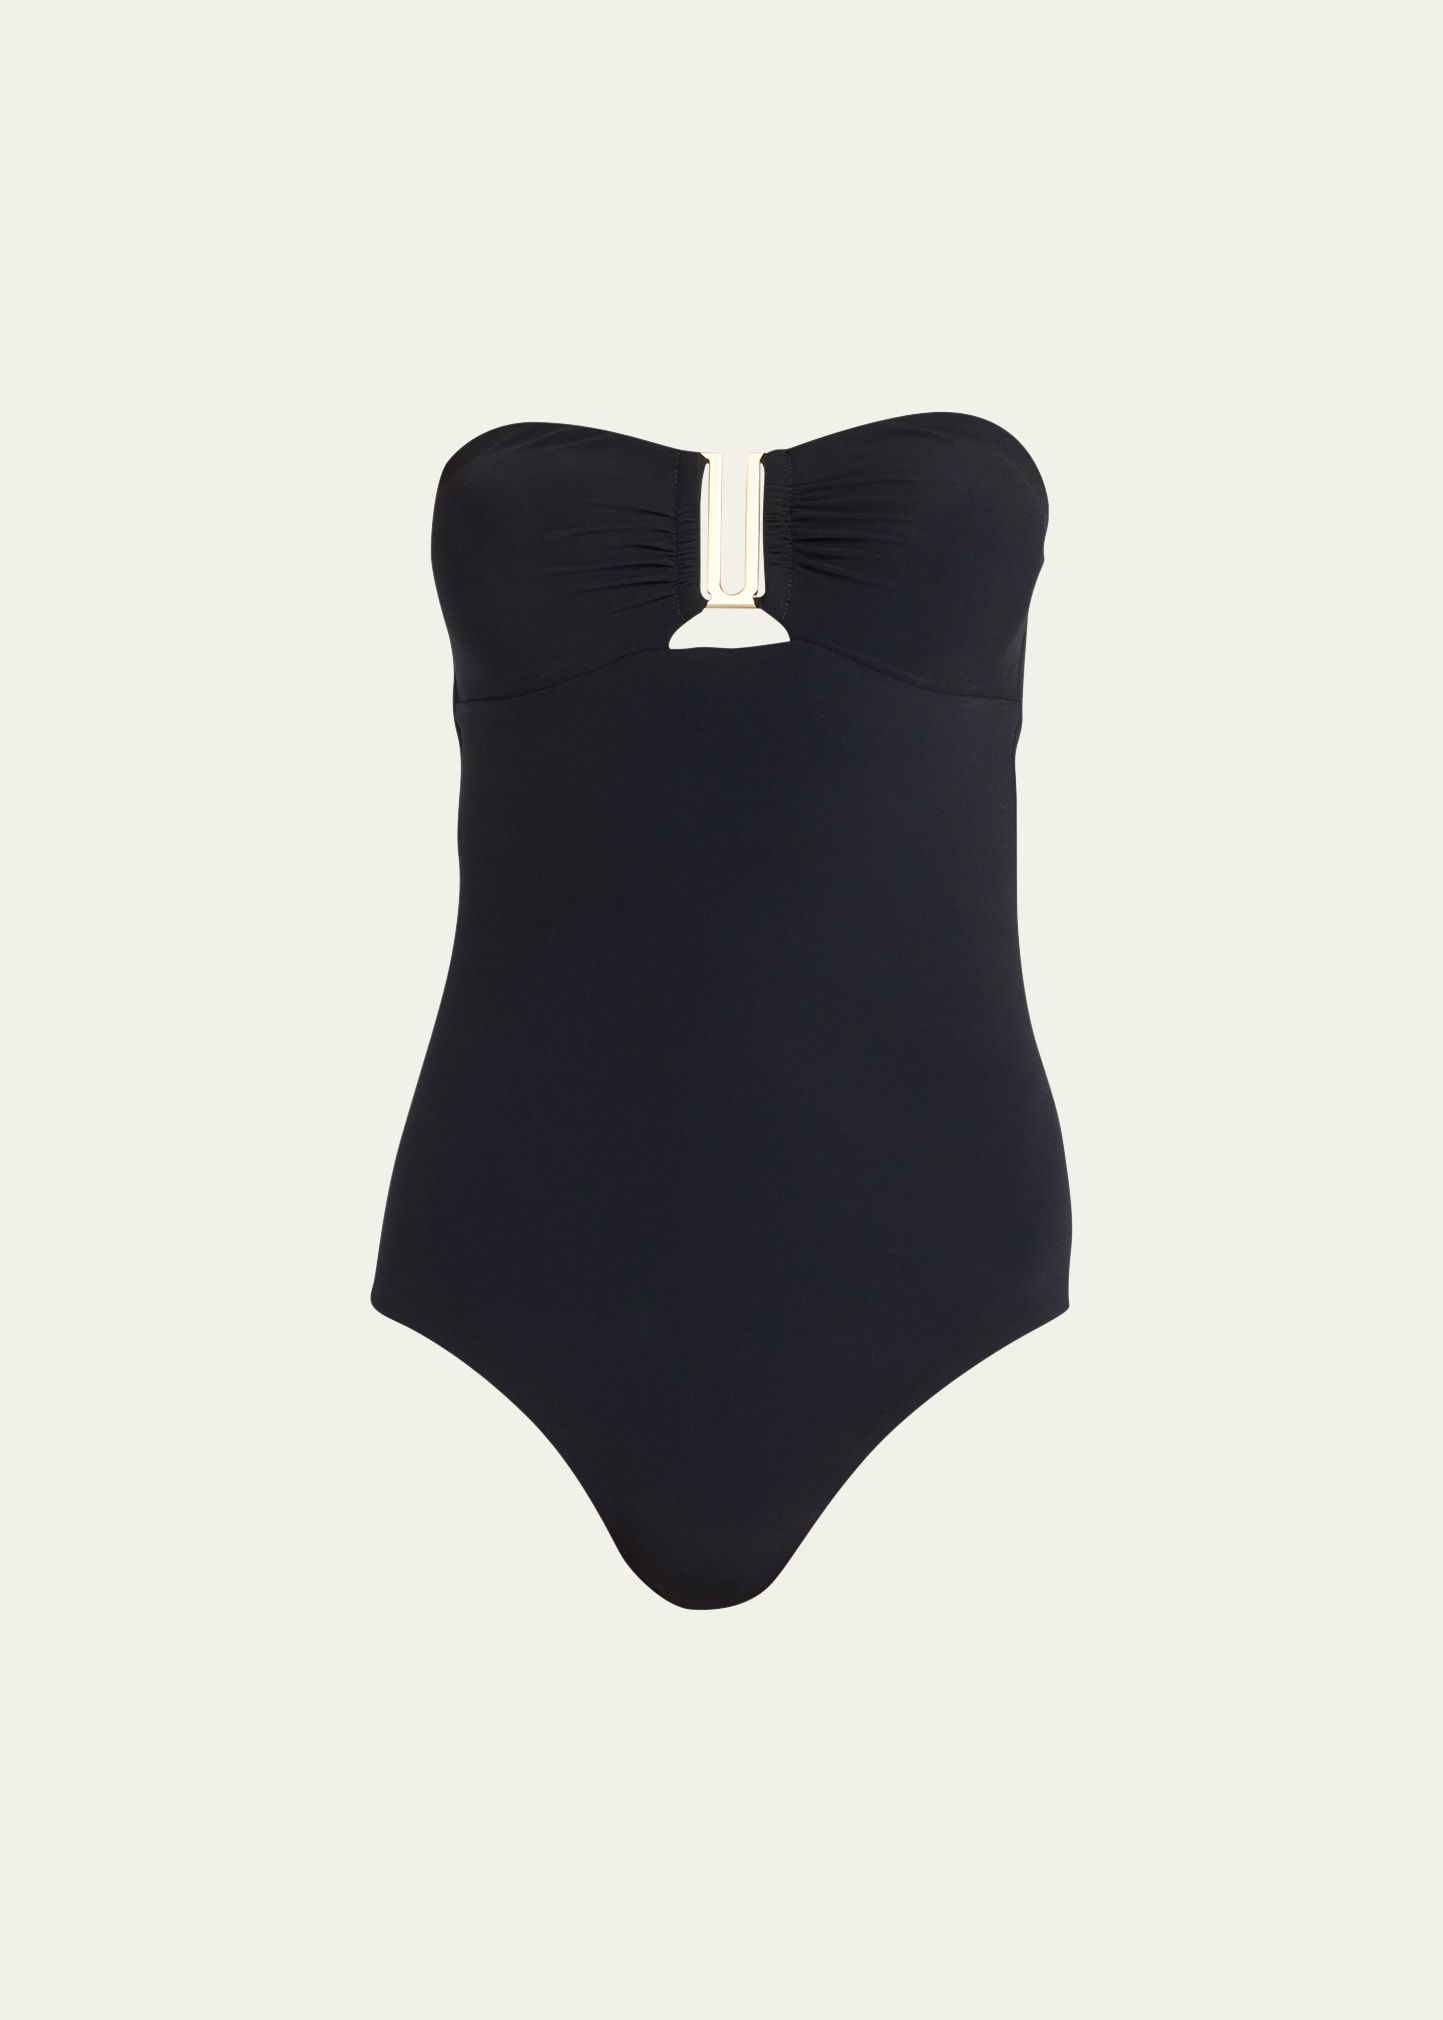 JETS Australia Jetset Bandeau One-Piece Swimsuit | Bergdorf Goodman